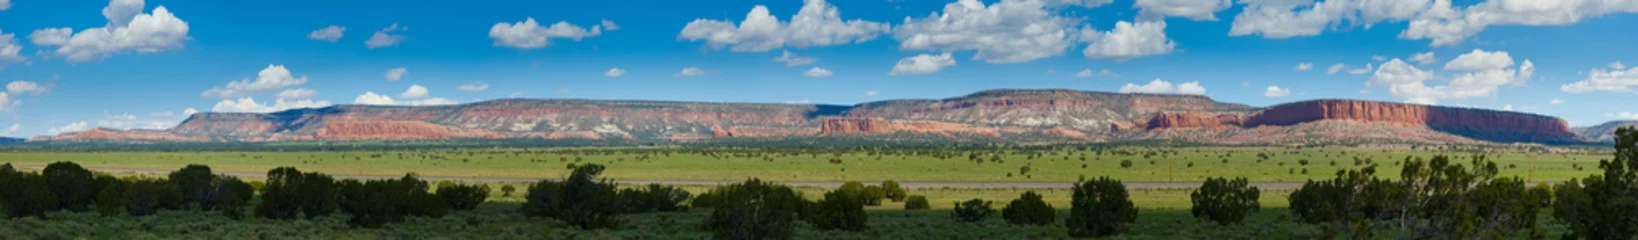 Möbelaufkleber Route 66 Rote Berge von Arizona - Panorama